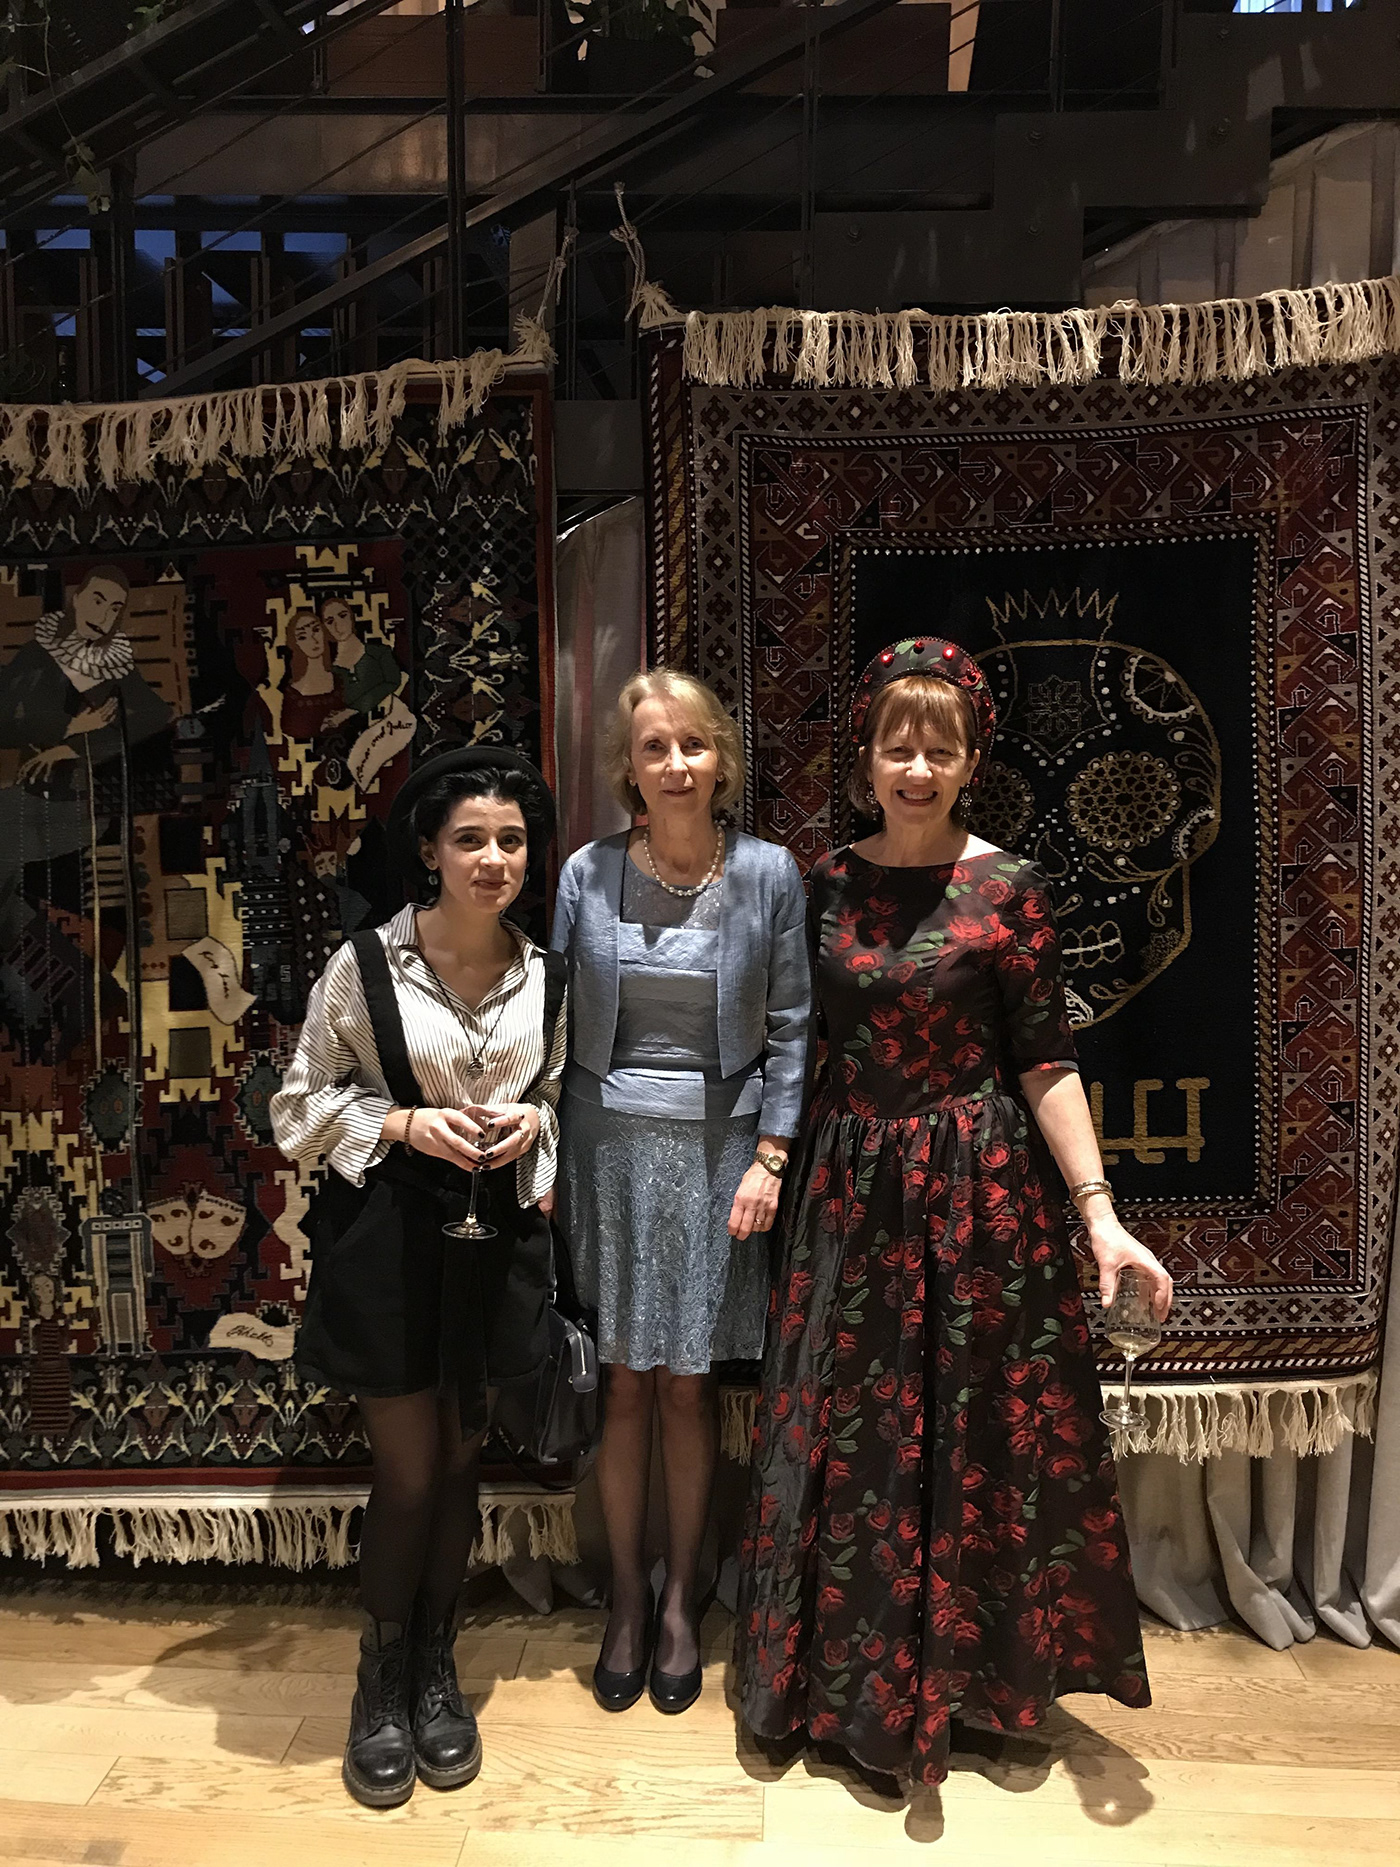 hamlet tobeornottobe king shakespeare azerbaijan pattern carpet vectorcarpet handmade